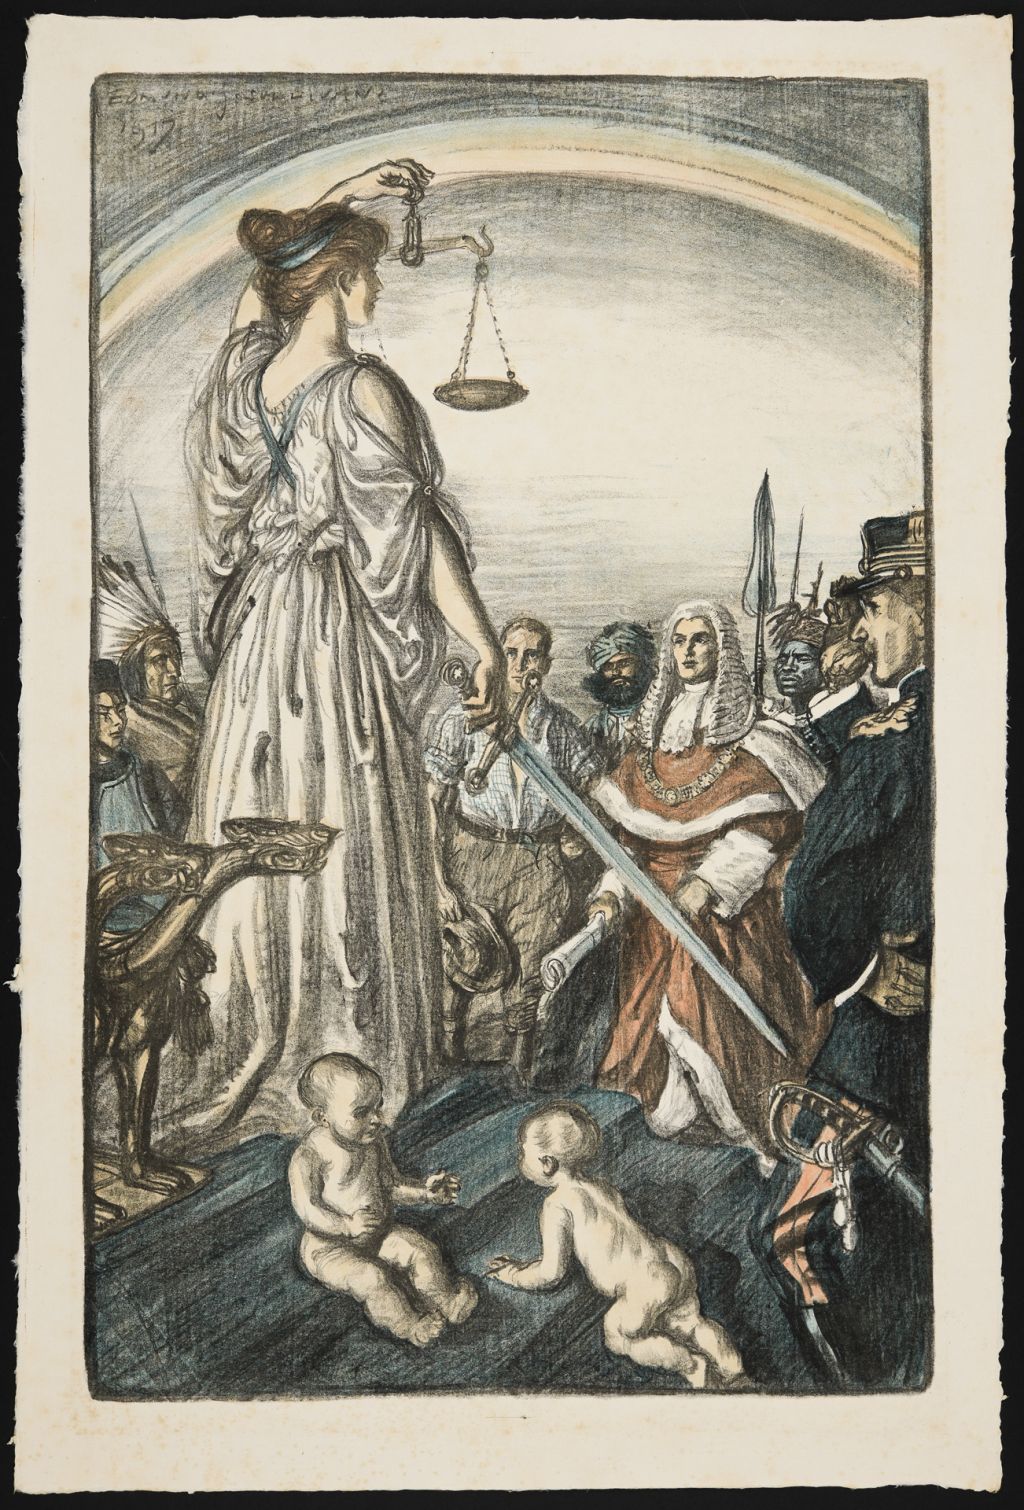 The Reign of Justice - Edmund J. Sullivan